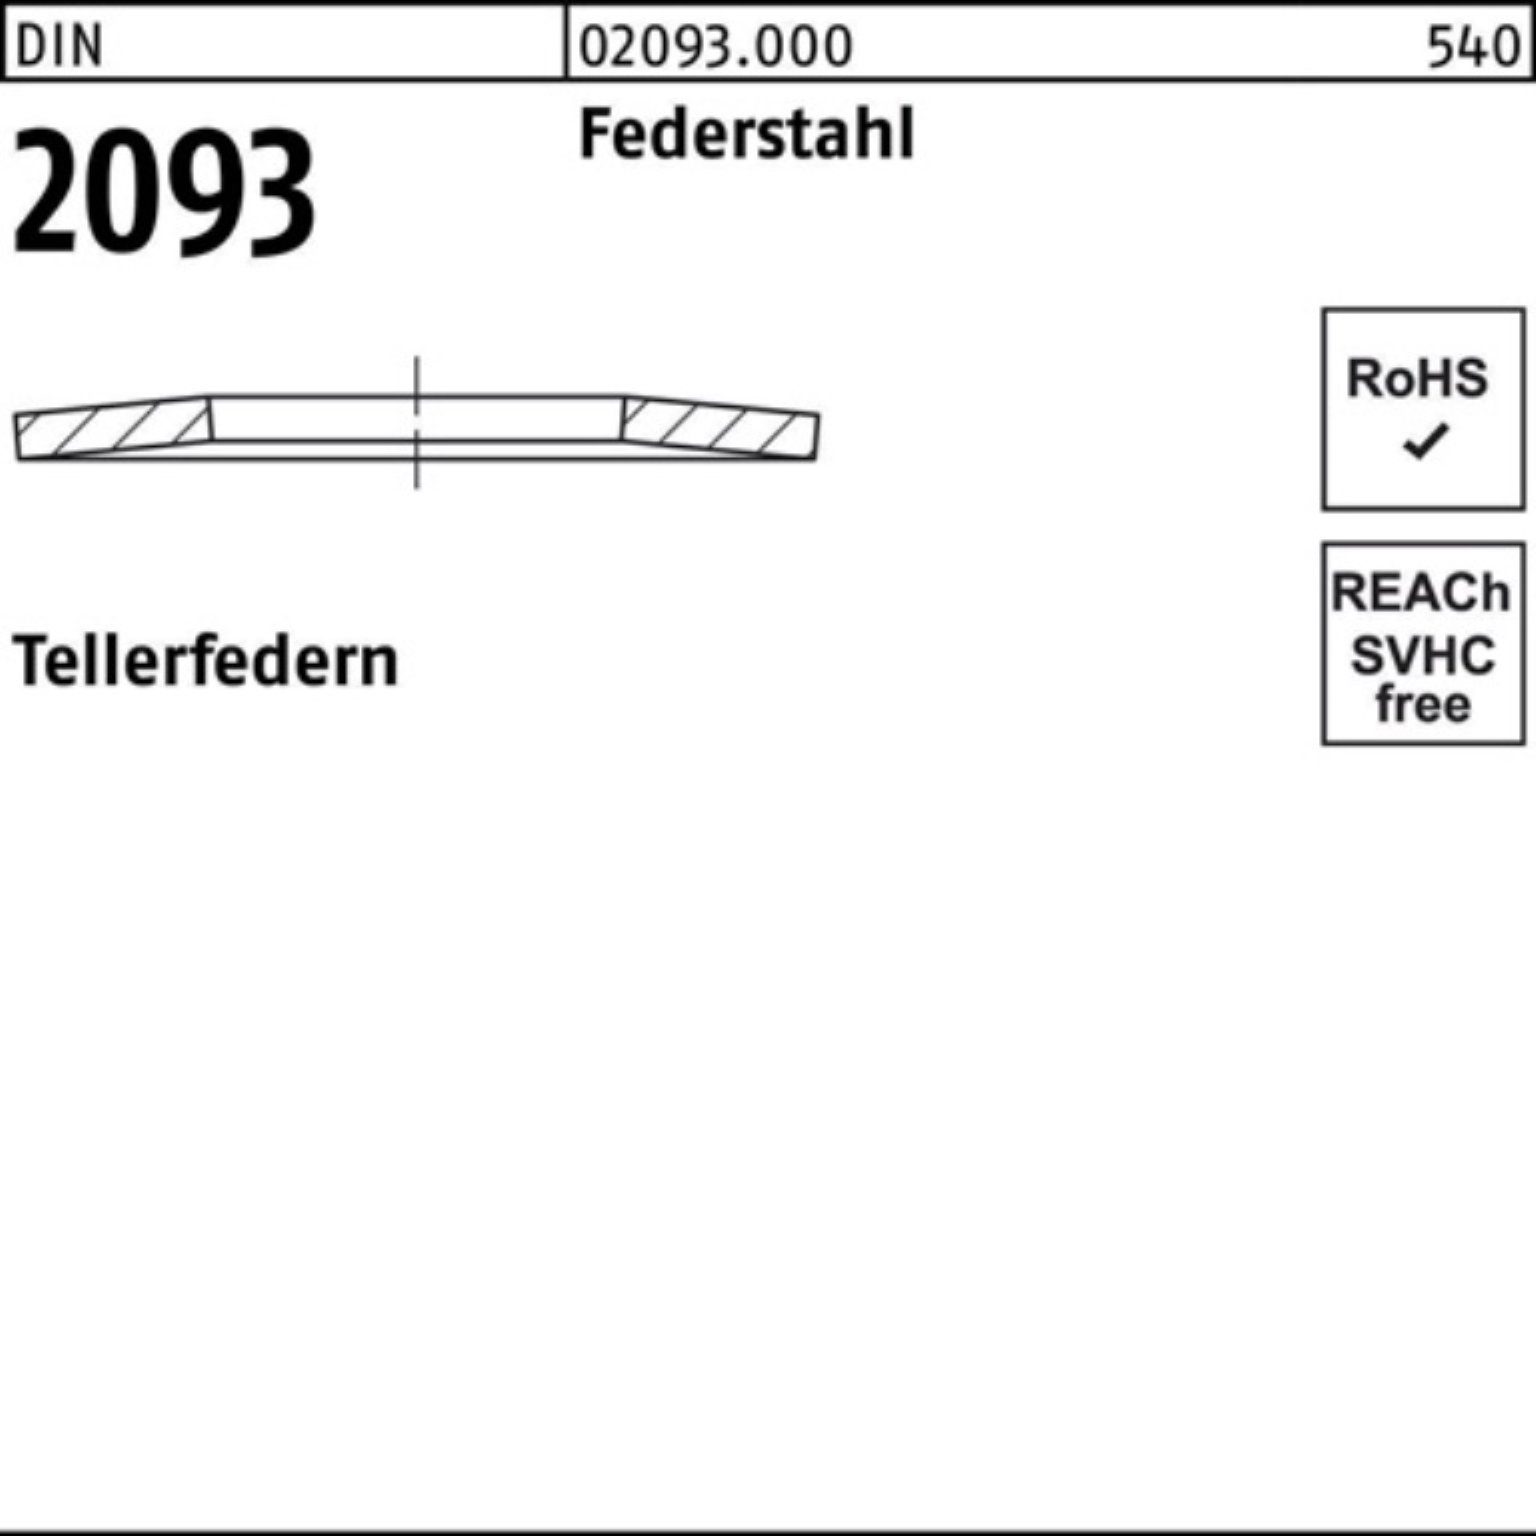 Stück DIN 200 Tellerfeder 200er Reyher Pack 12x Tellerfeder 4,2x0,6 DIN Federstahl 2093